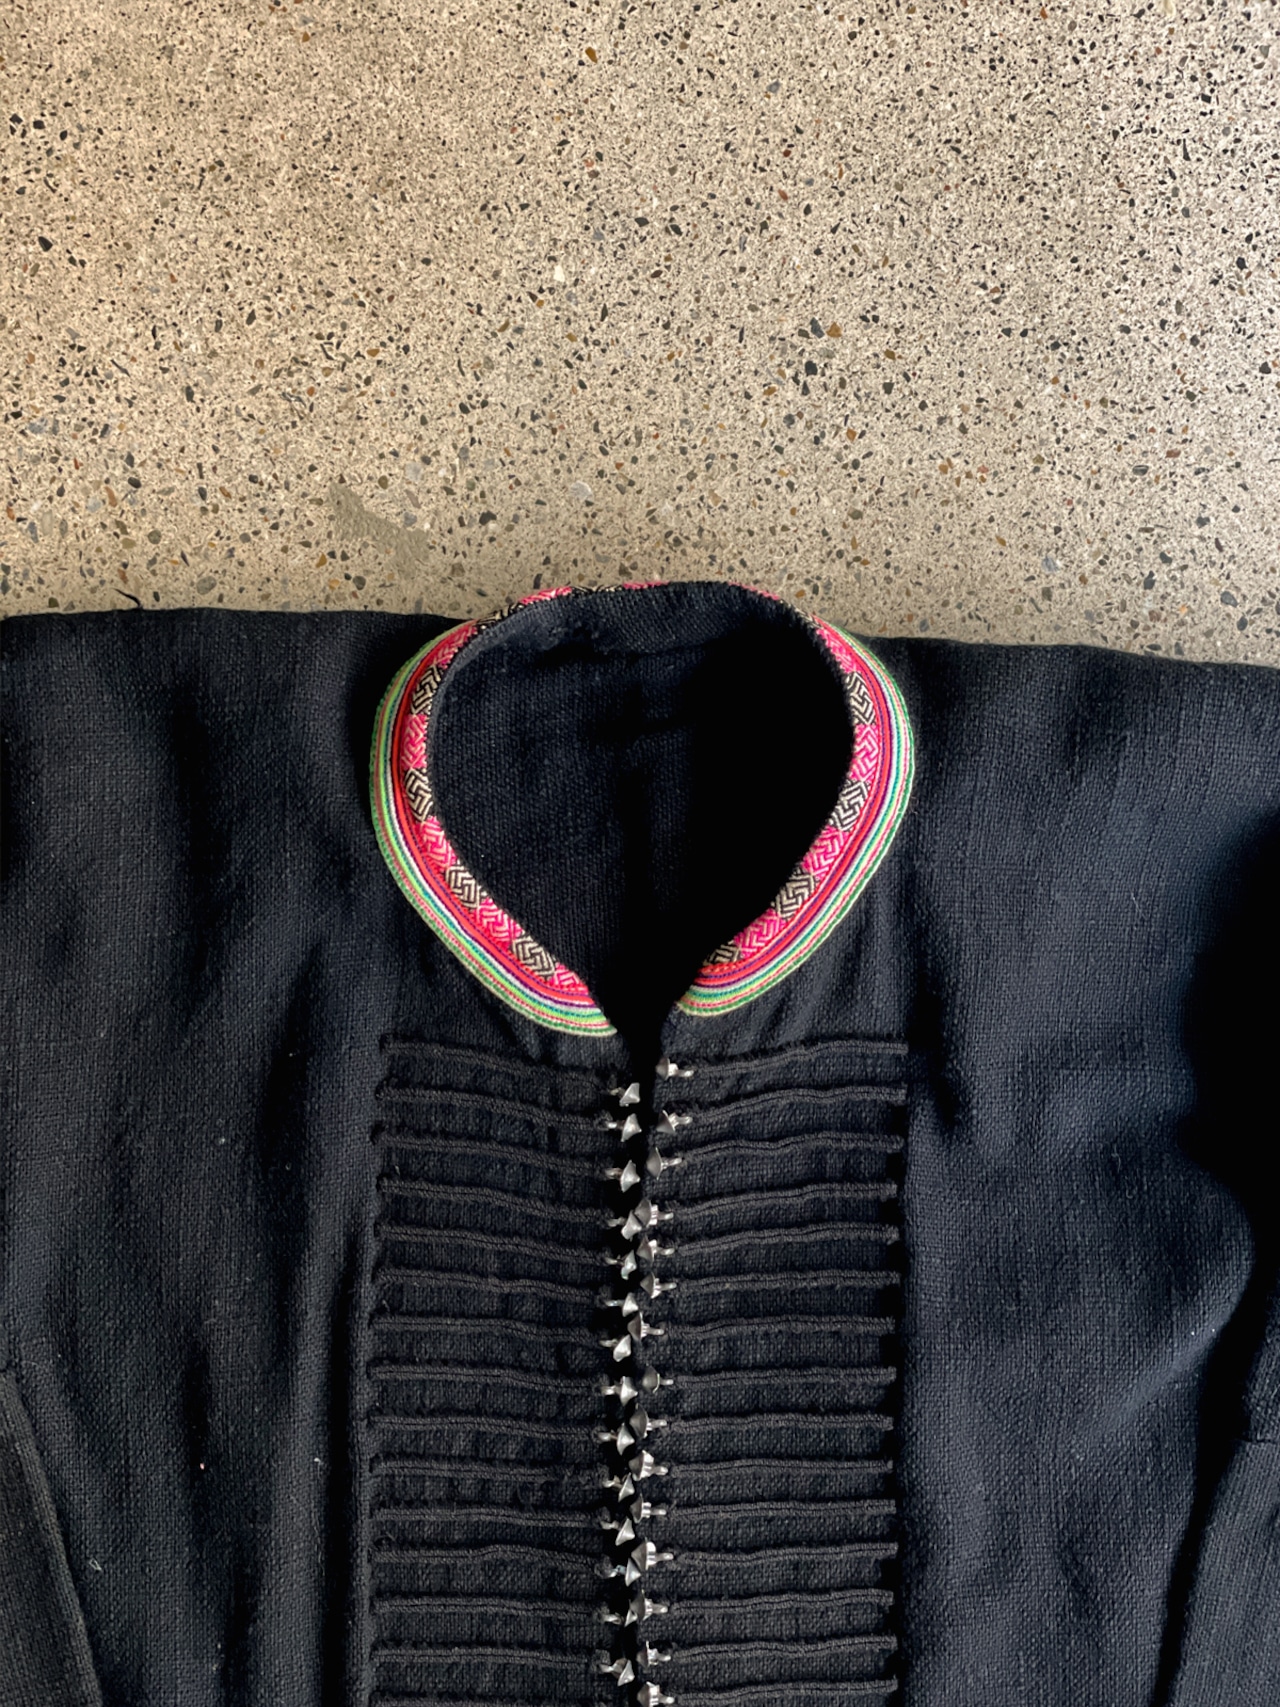 Dao tribe／ Vintage studded jacket